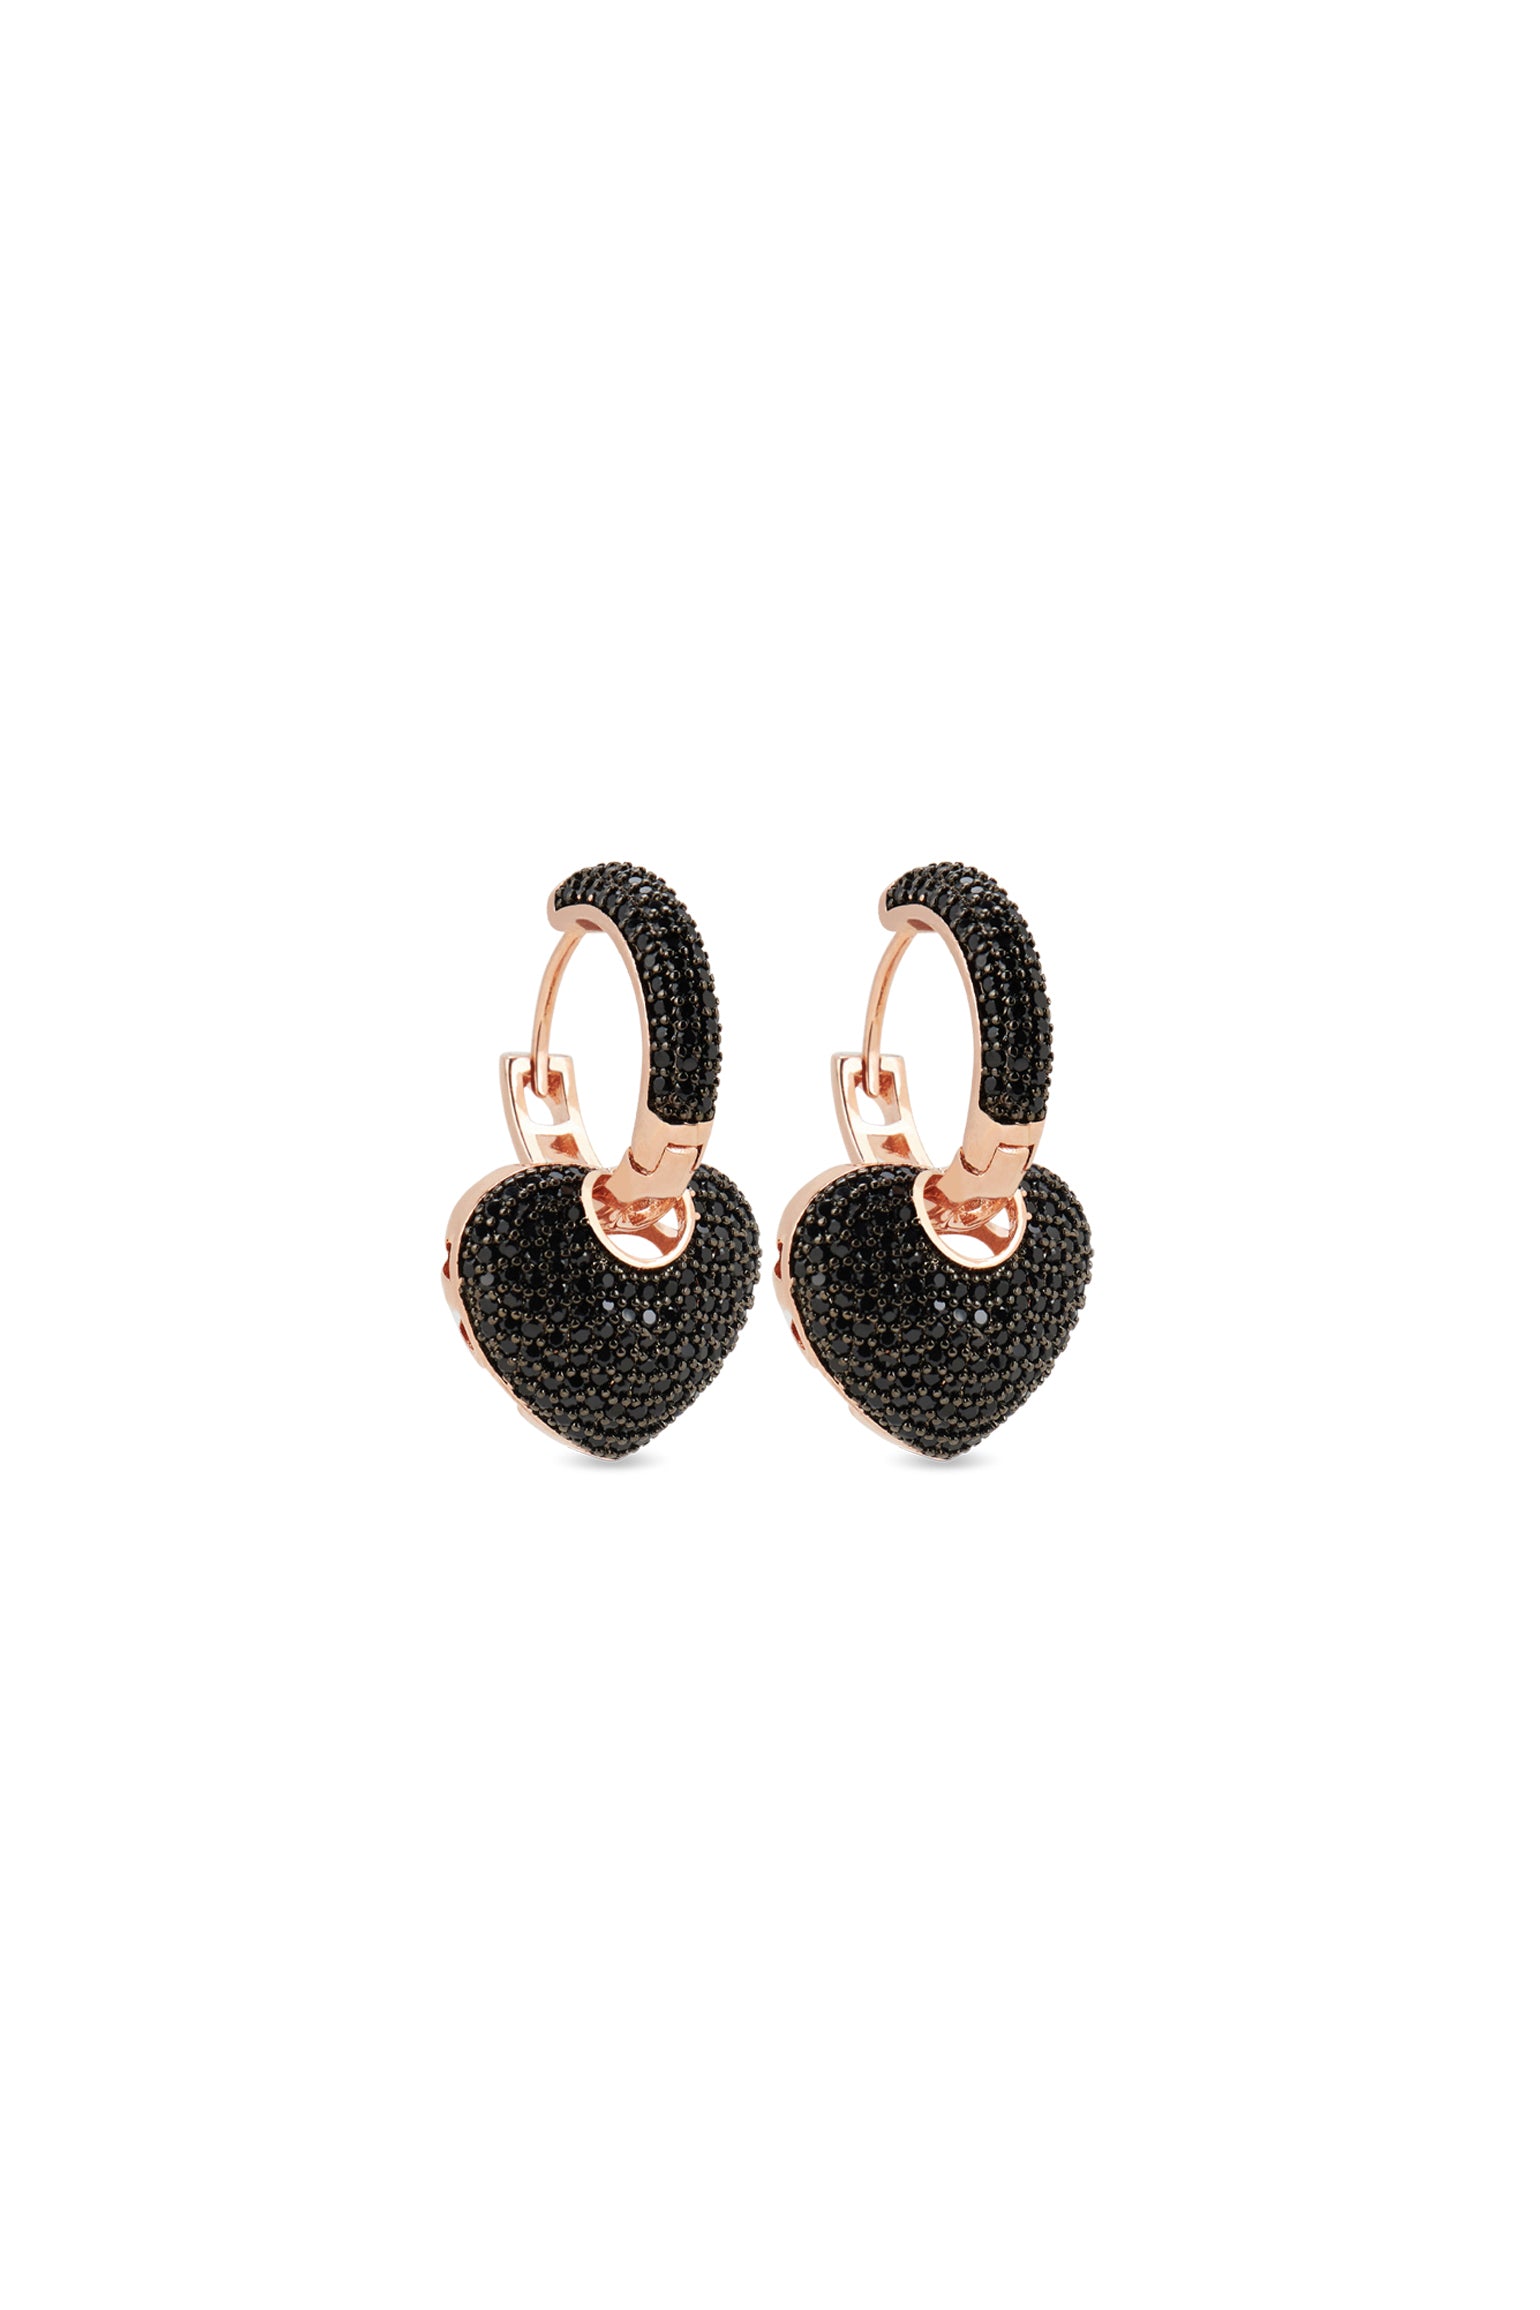 MELUSINA BIJOUX Pendant Earrings with Black Heart